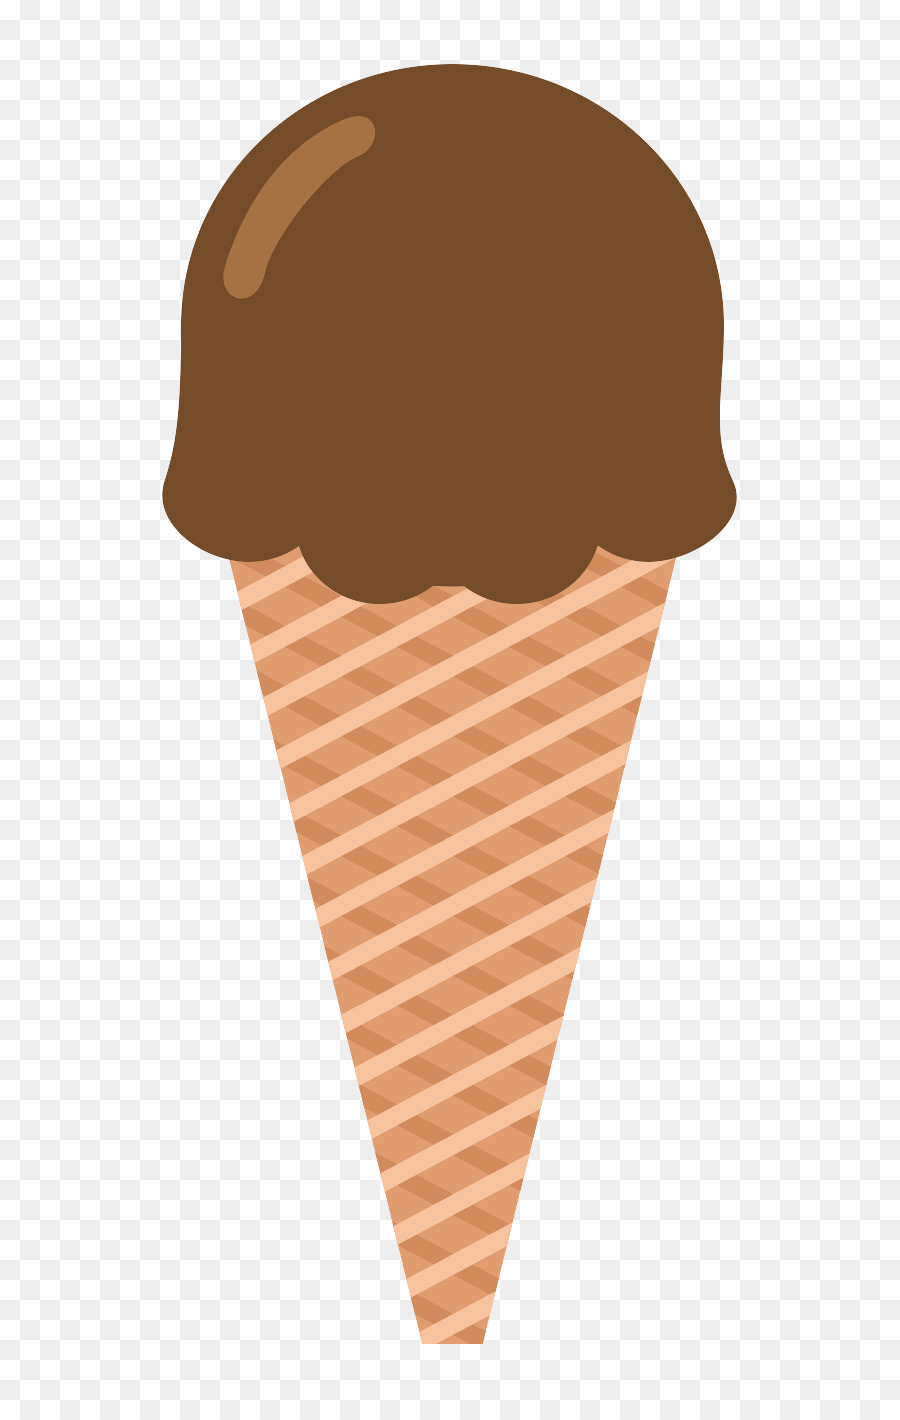 soft-serve-ice-creams # 152914